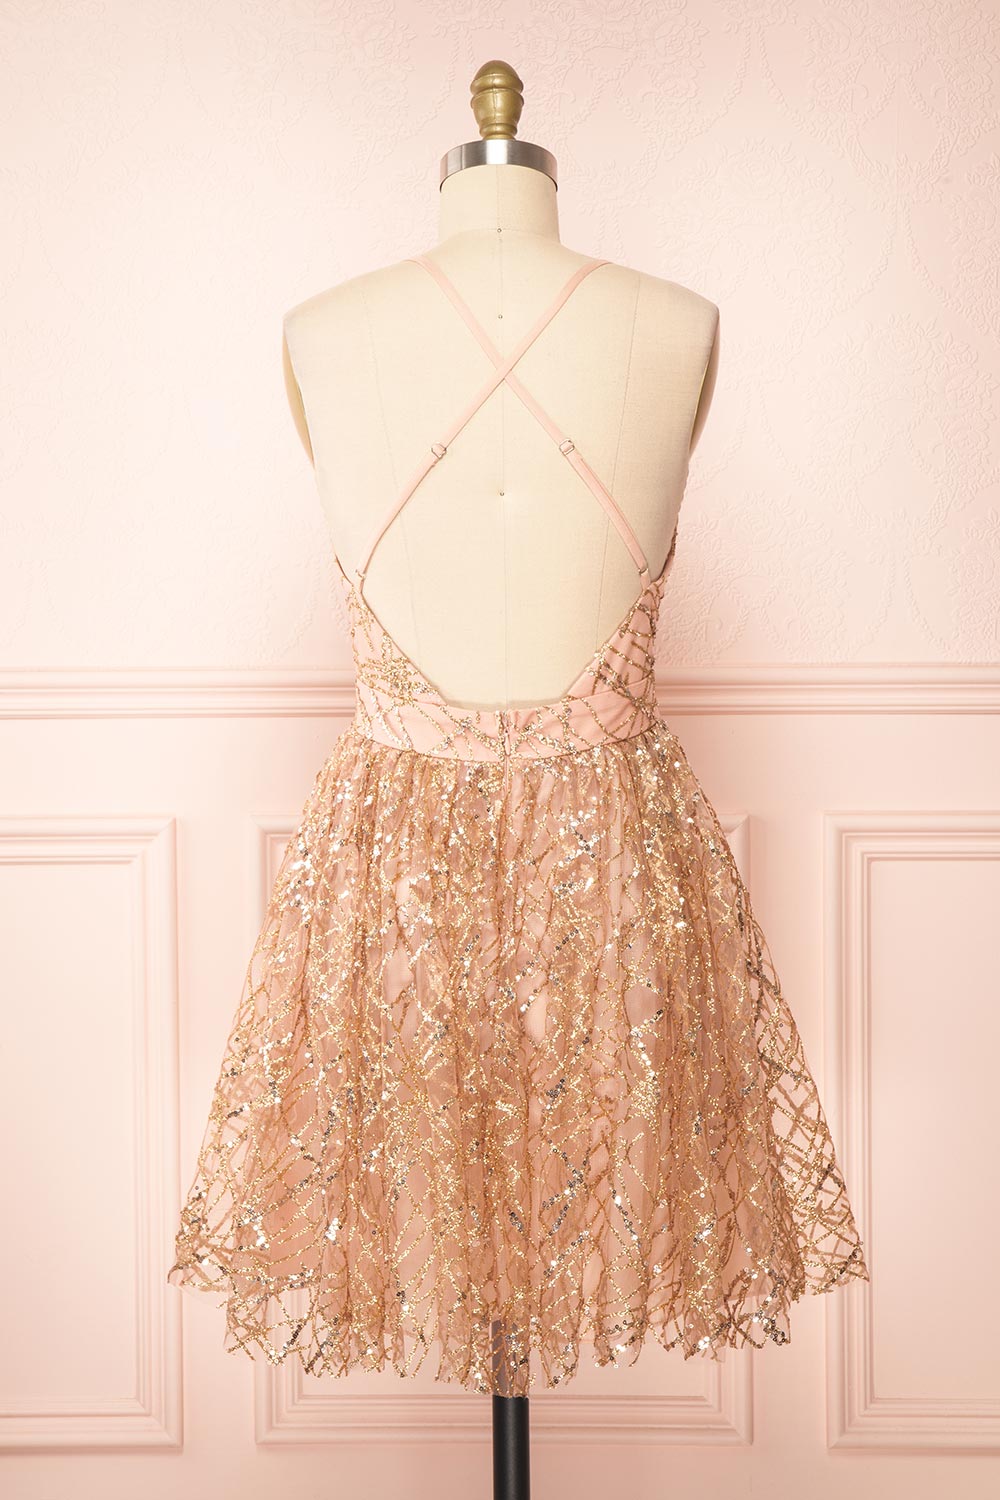 Astral Rose Gold Backless Short Sequin Dress | Boutique 1861 back view